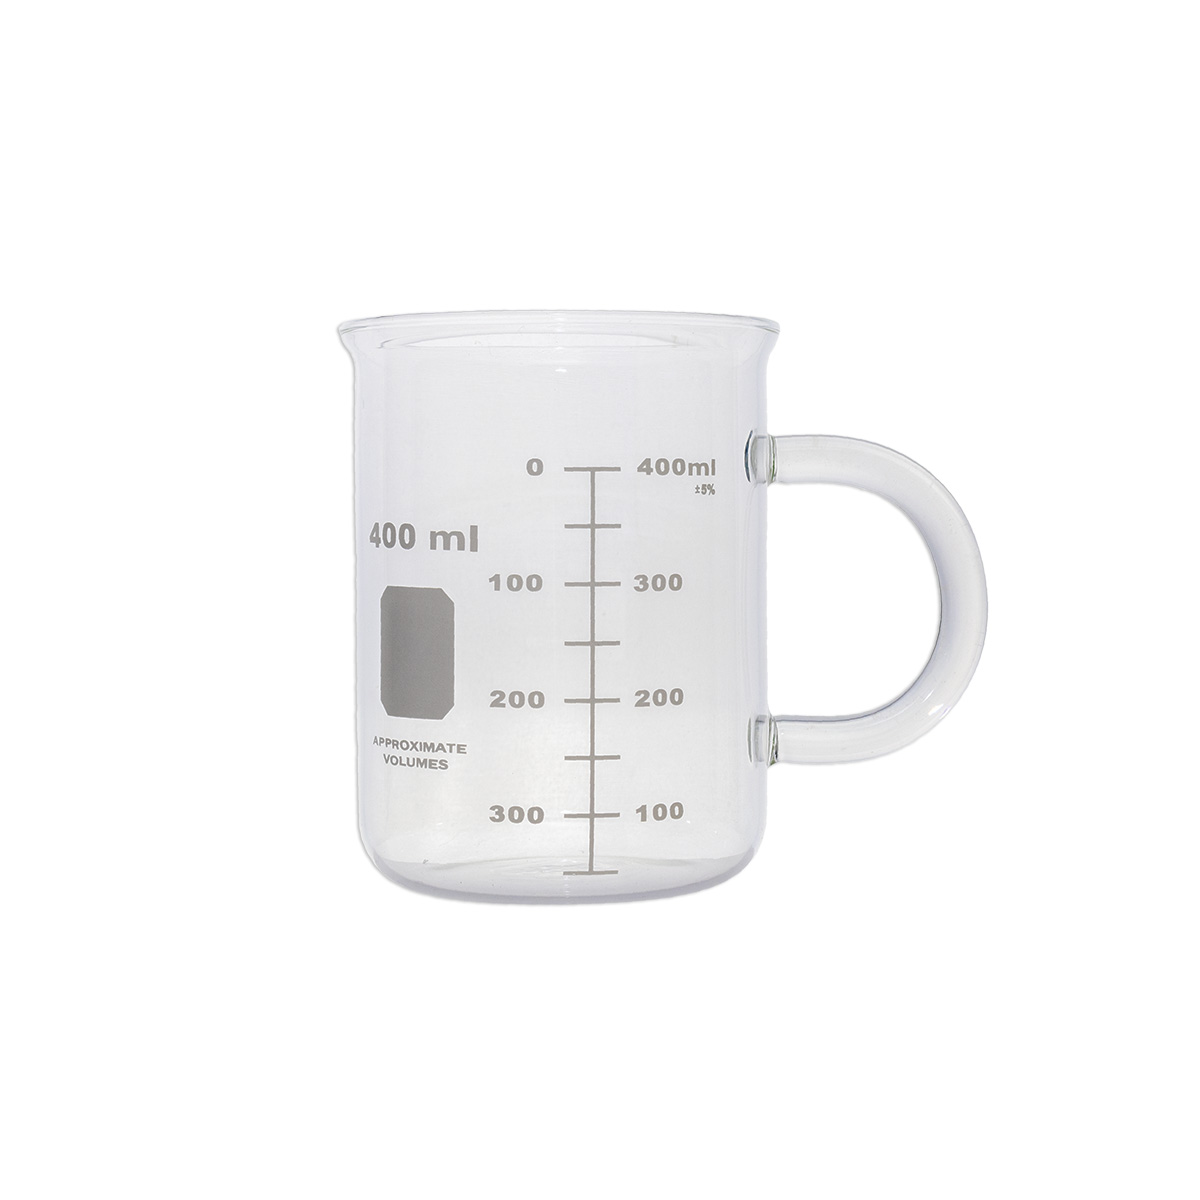  KINNOSE Graduated Beaker Mug with Handle and Durable